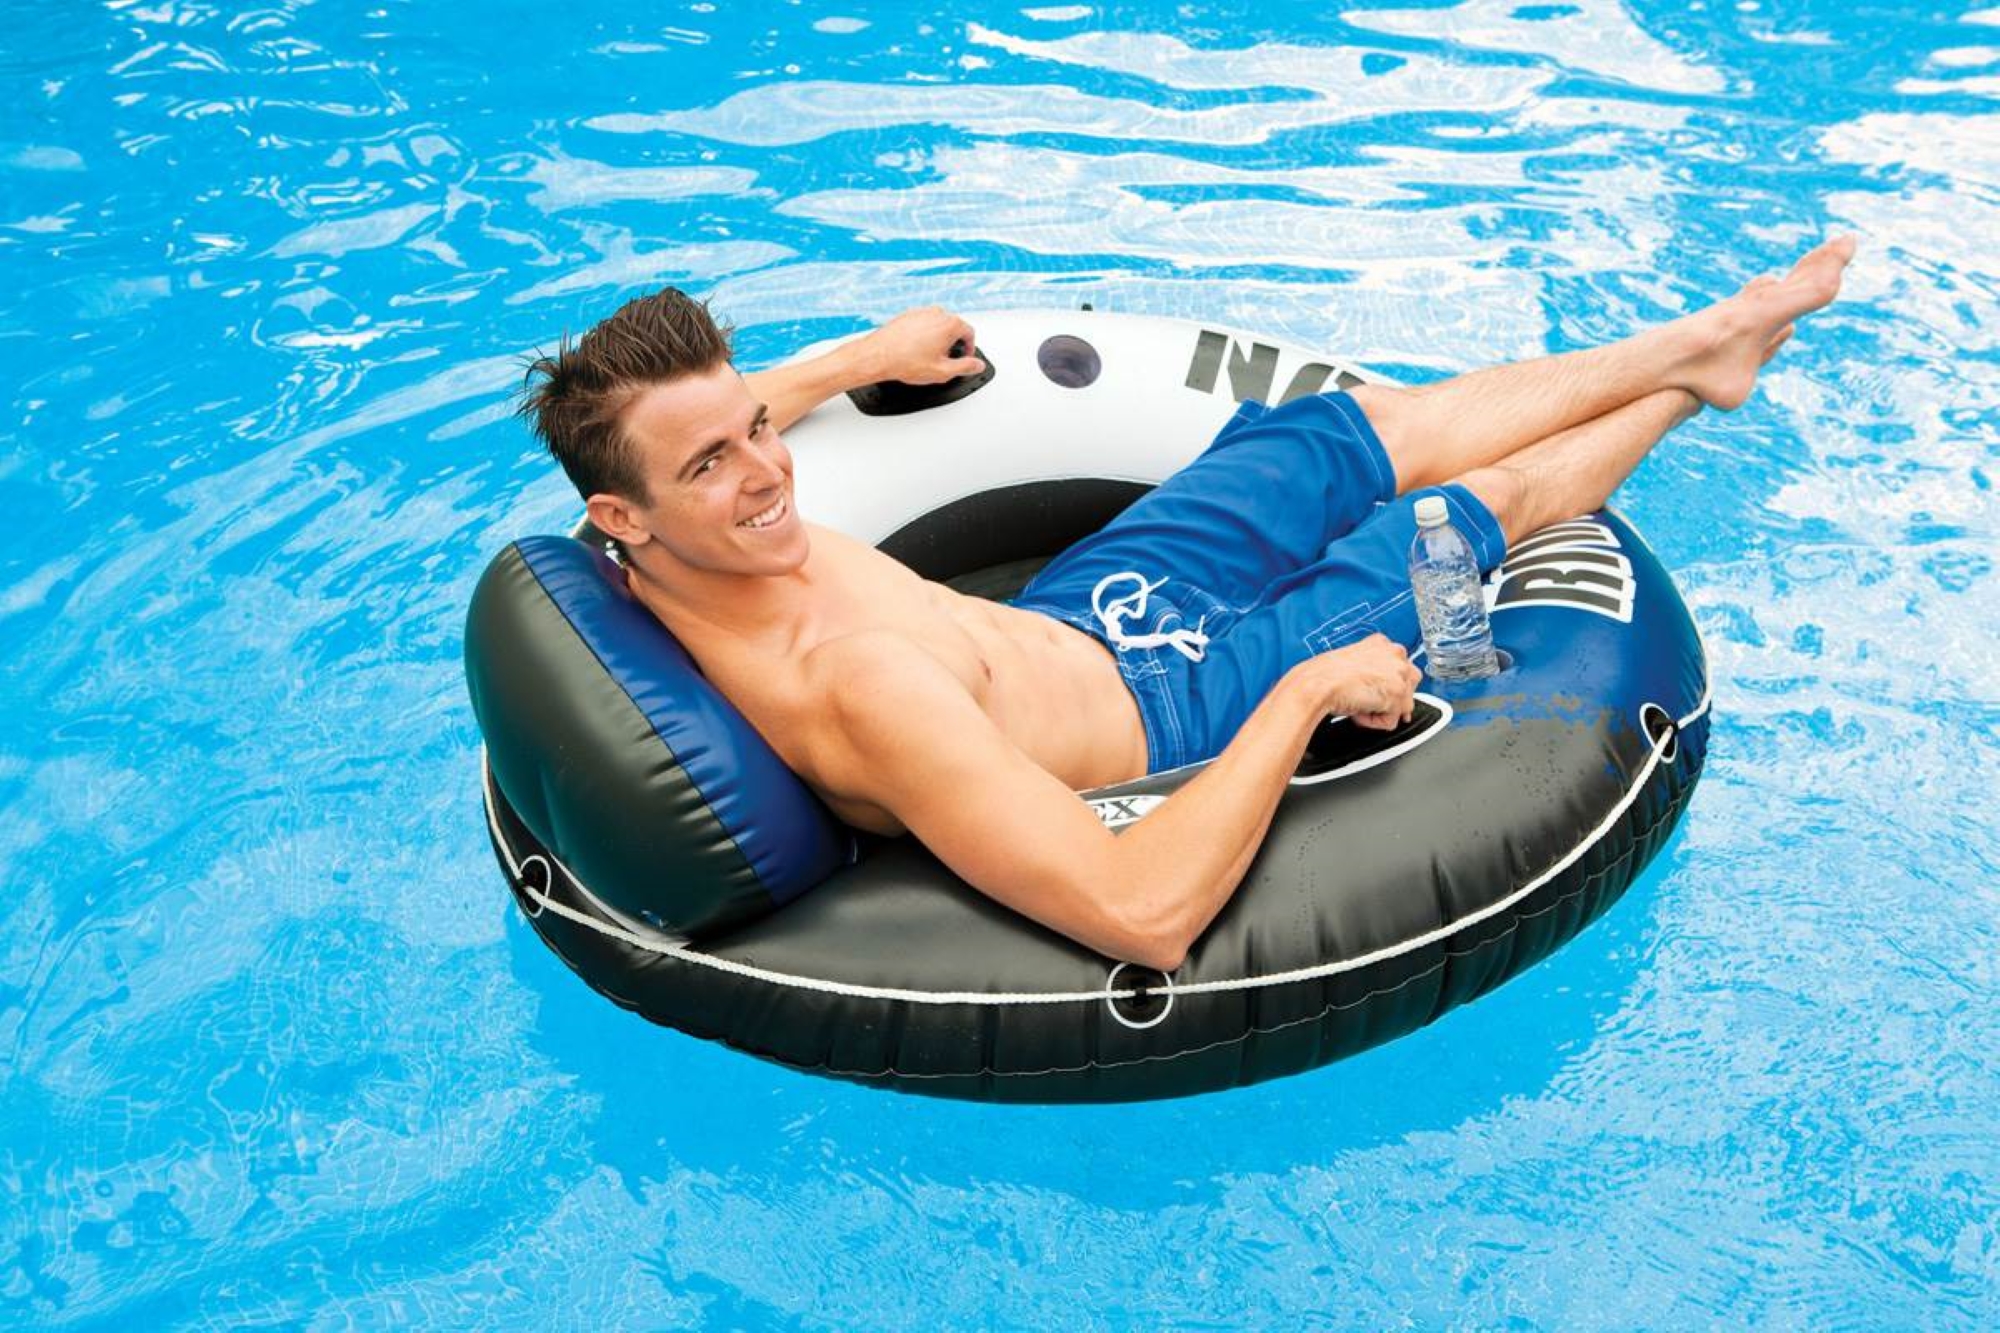 Intex　Water　Inflatable　Tube　River　Lake/Pool/River　Run　for　Floating　Raft　(2　Pack)